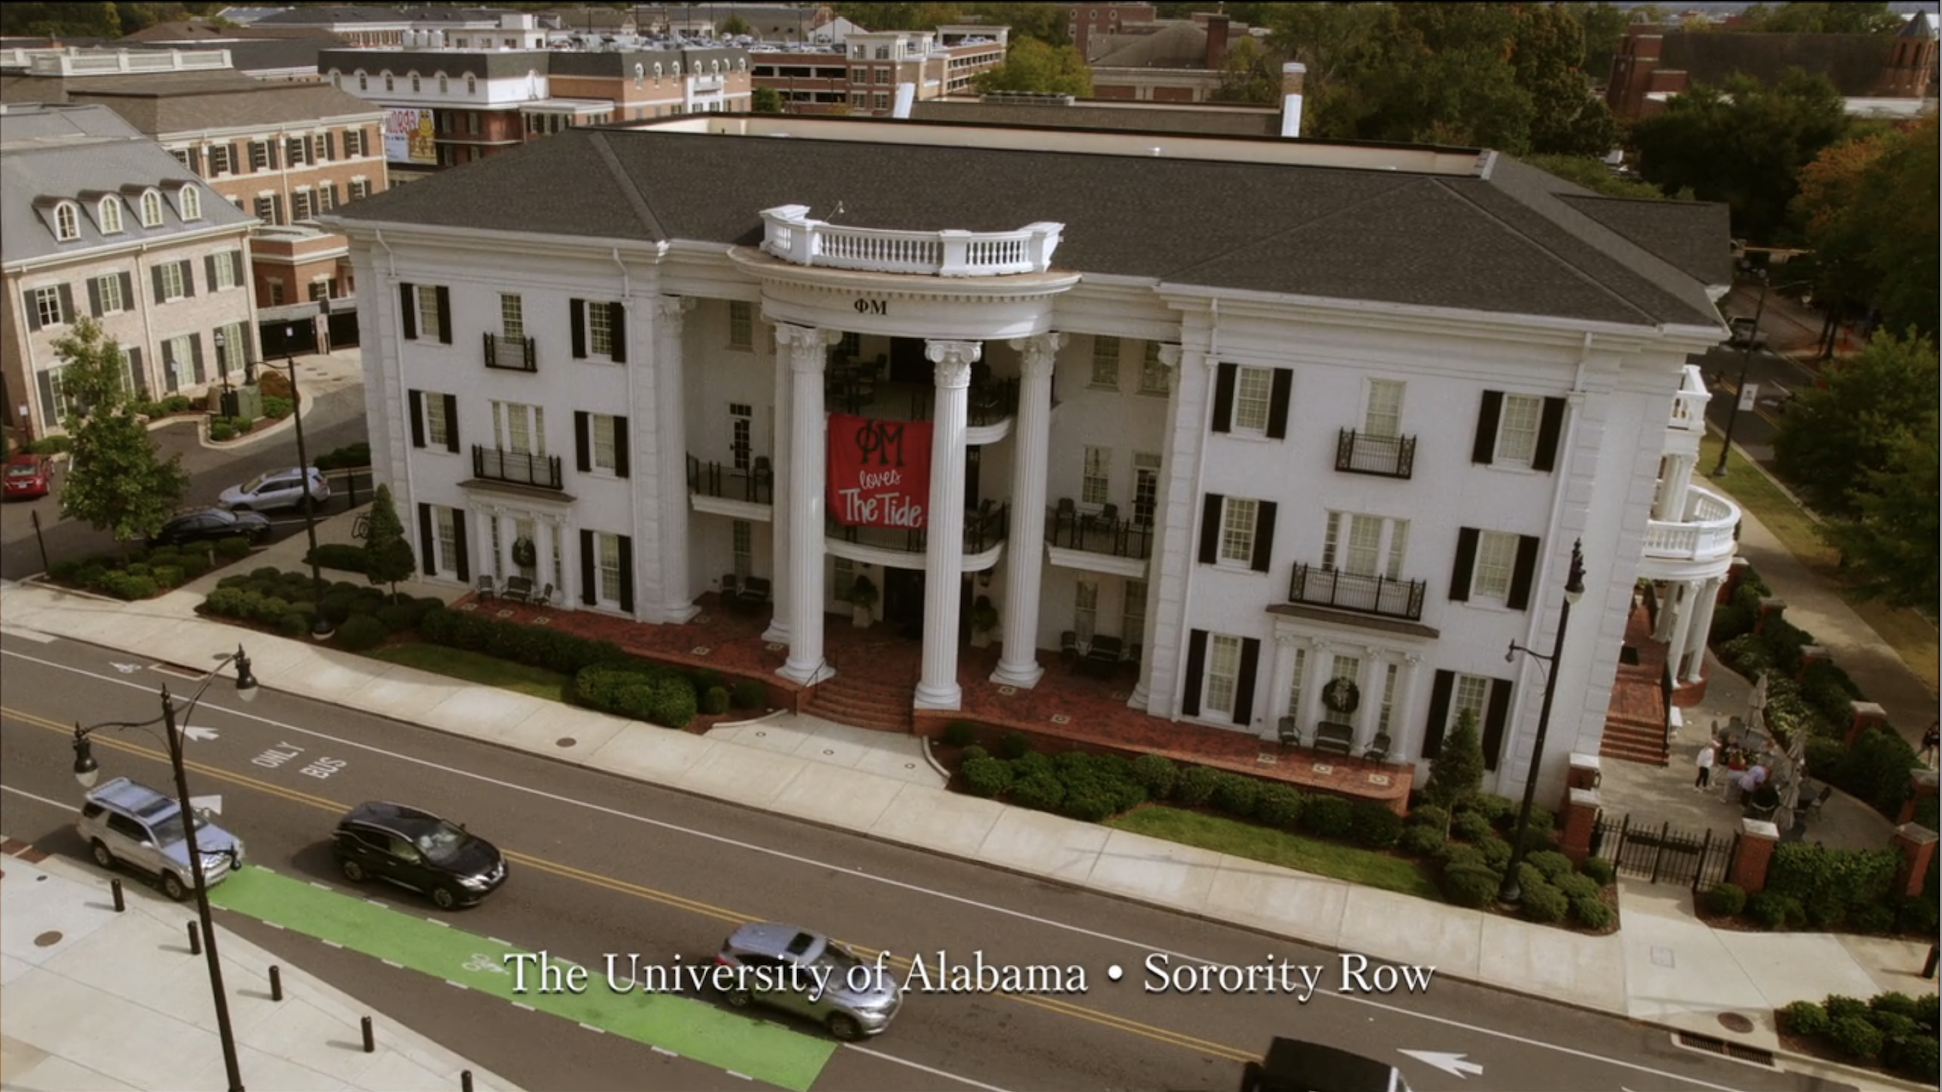 &quot;The University of Alabama • Sorority Row&quot;